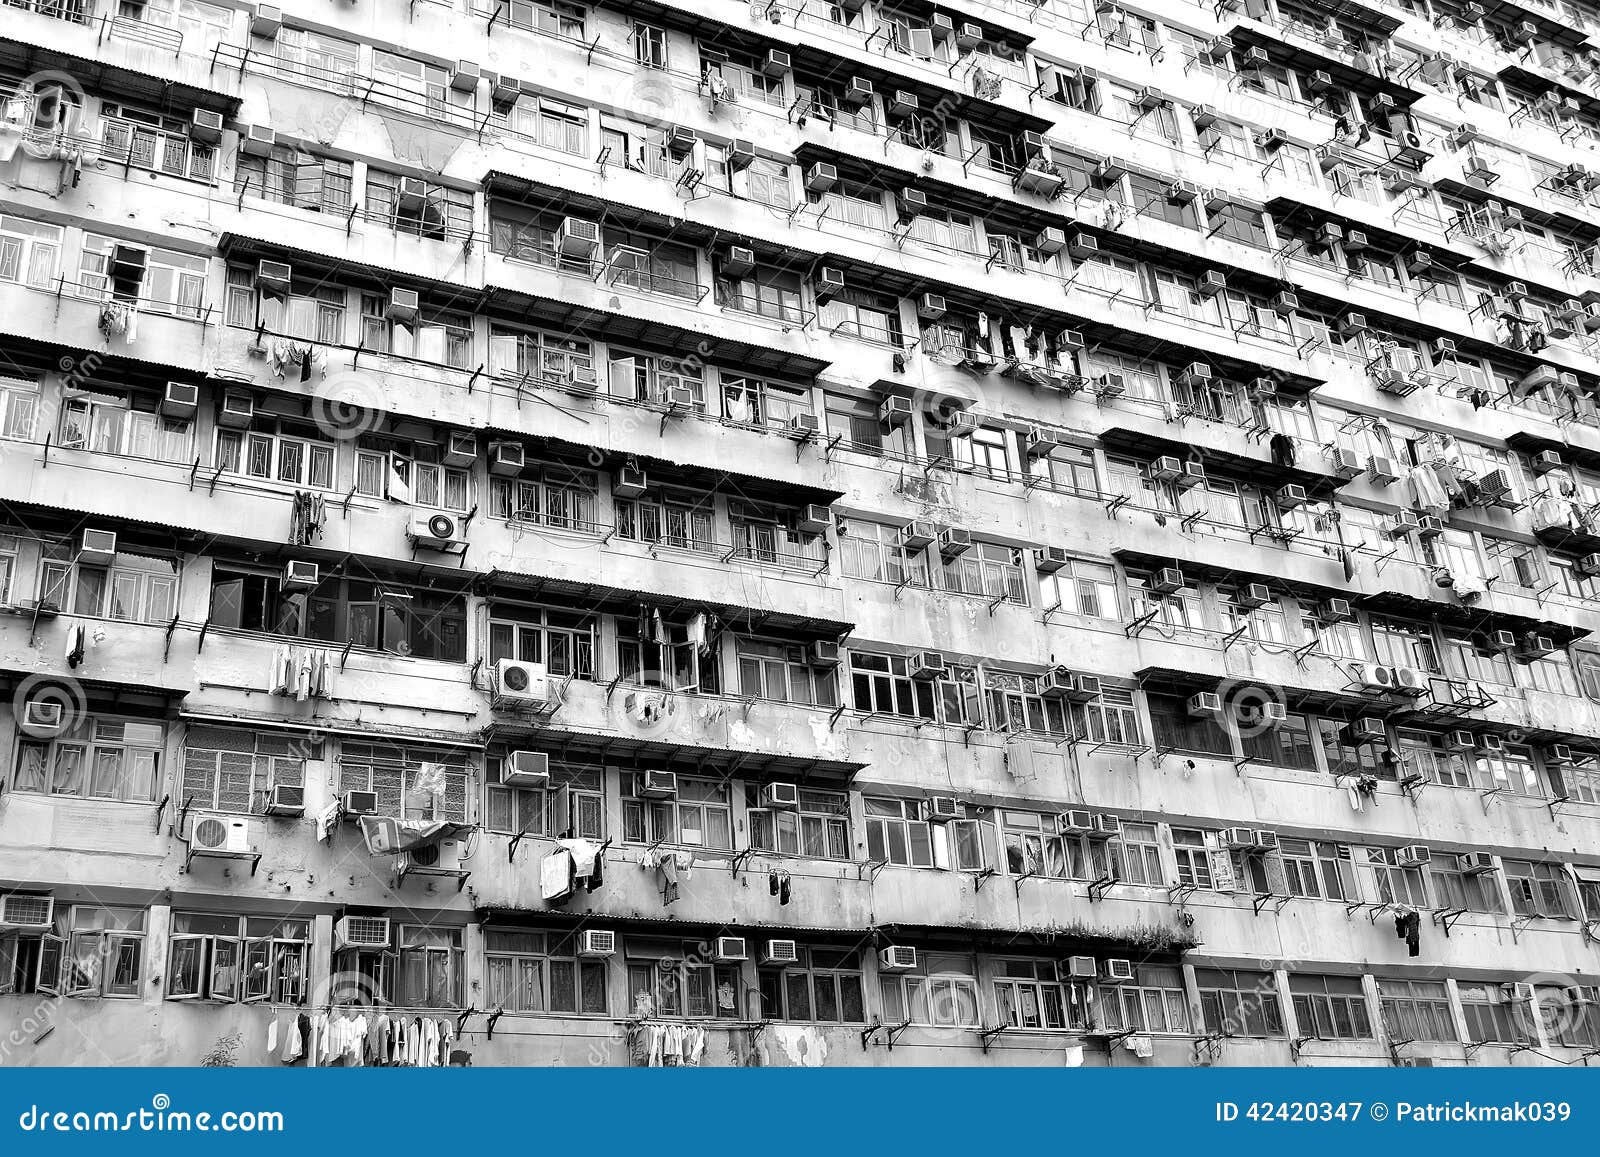 hong-kong-housing-black-white-crowded-co